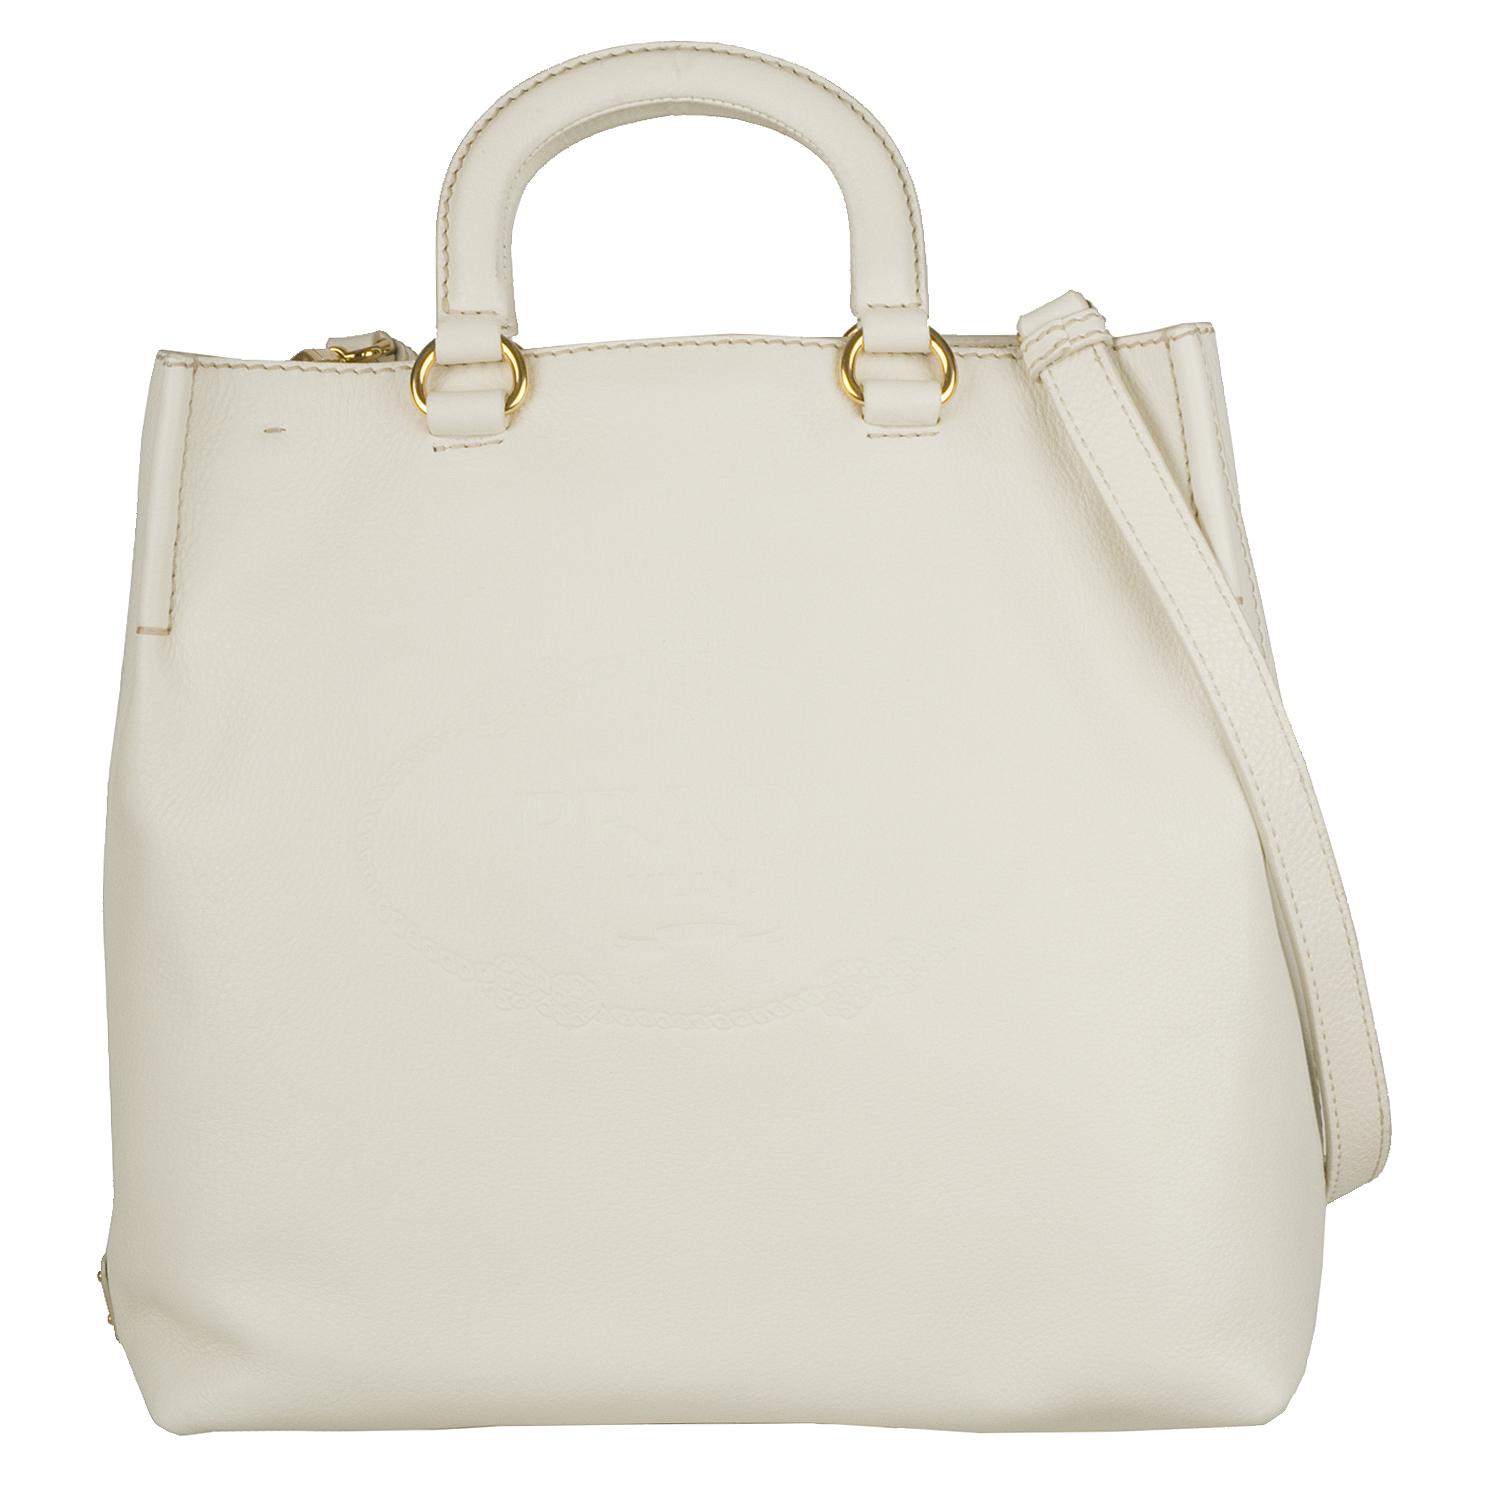 Prada Ivory Leather Tote Bag - 13647552 - Overstock.com Shopping ...  